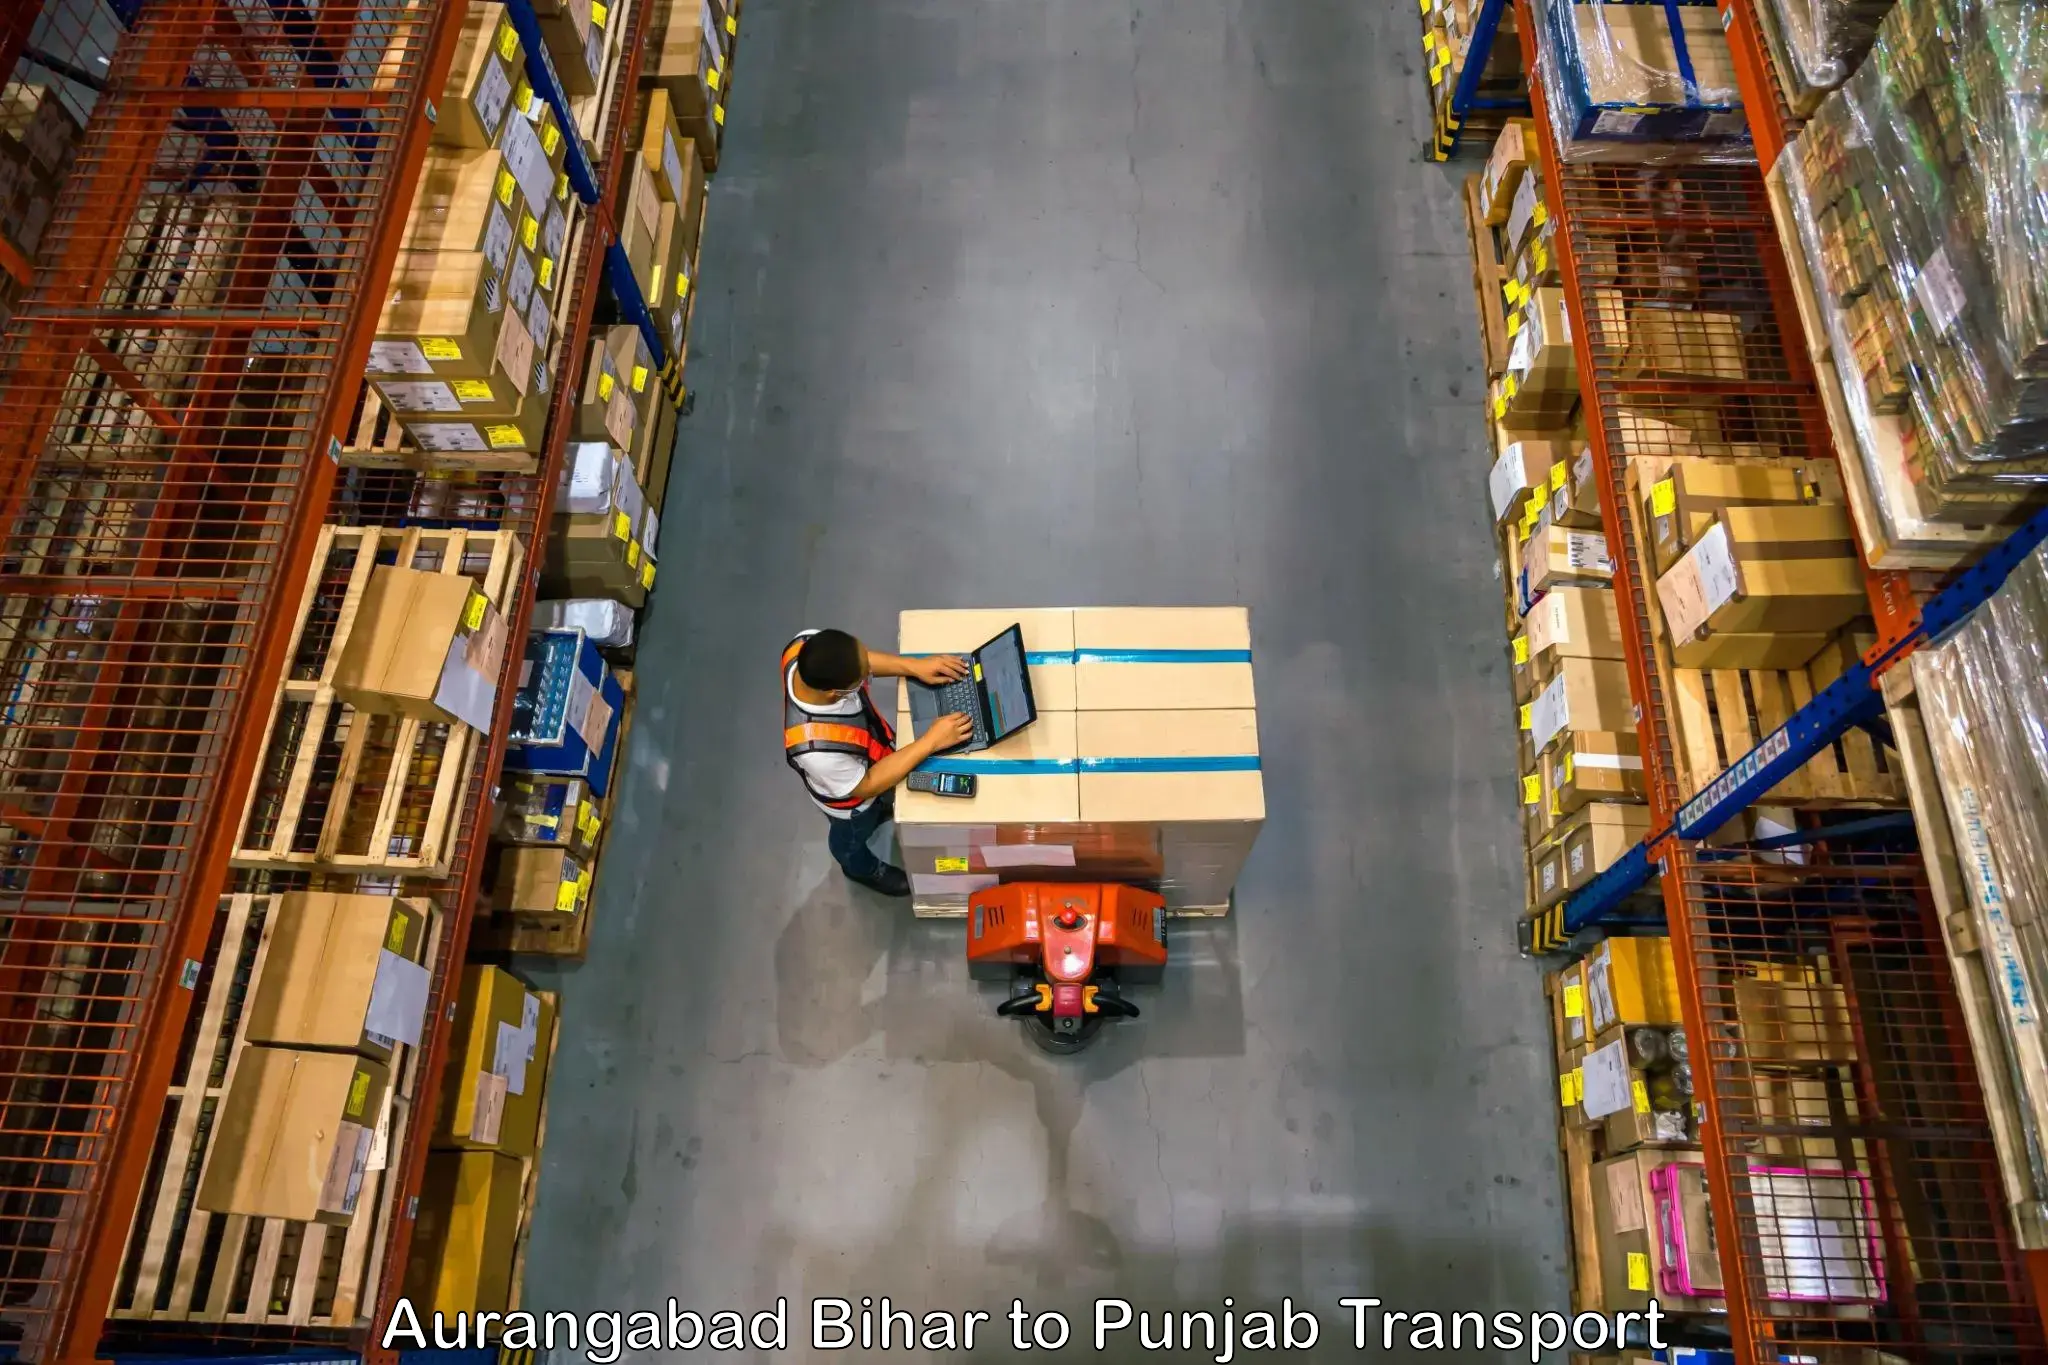 Daily parcel service transport Aurangabad Bihar to Mandi Gobindgarh